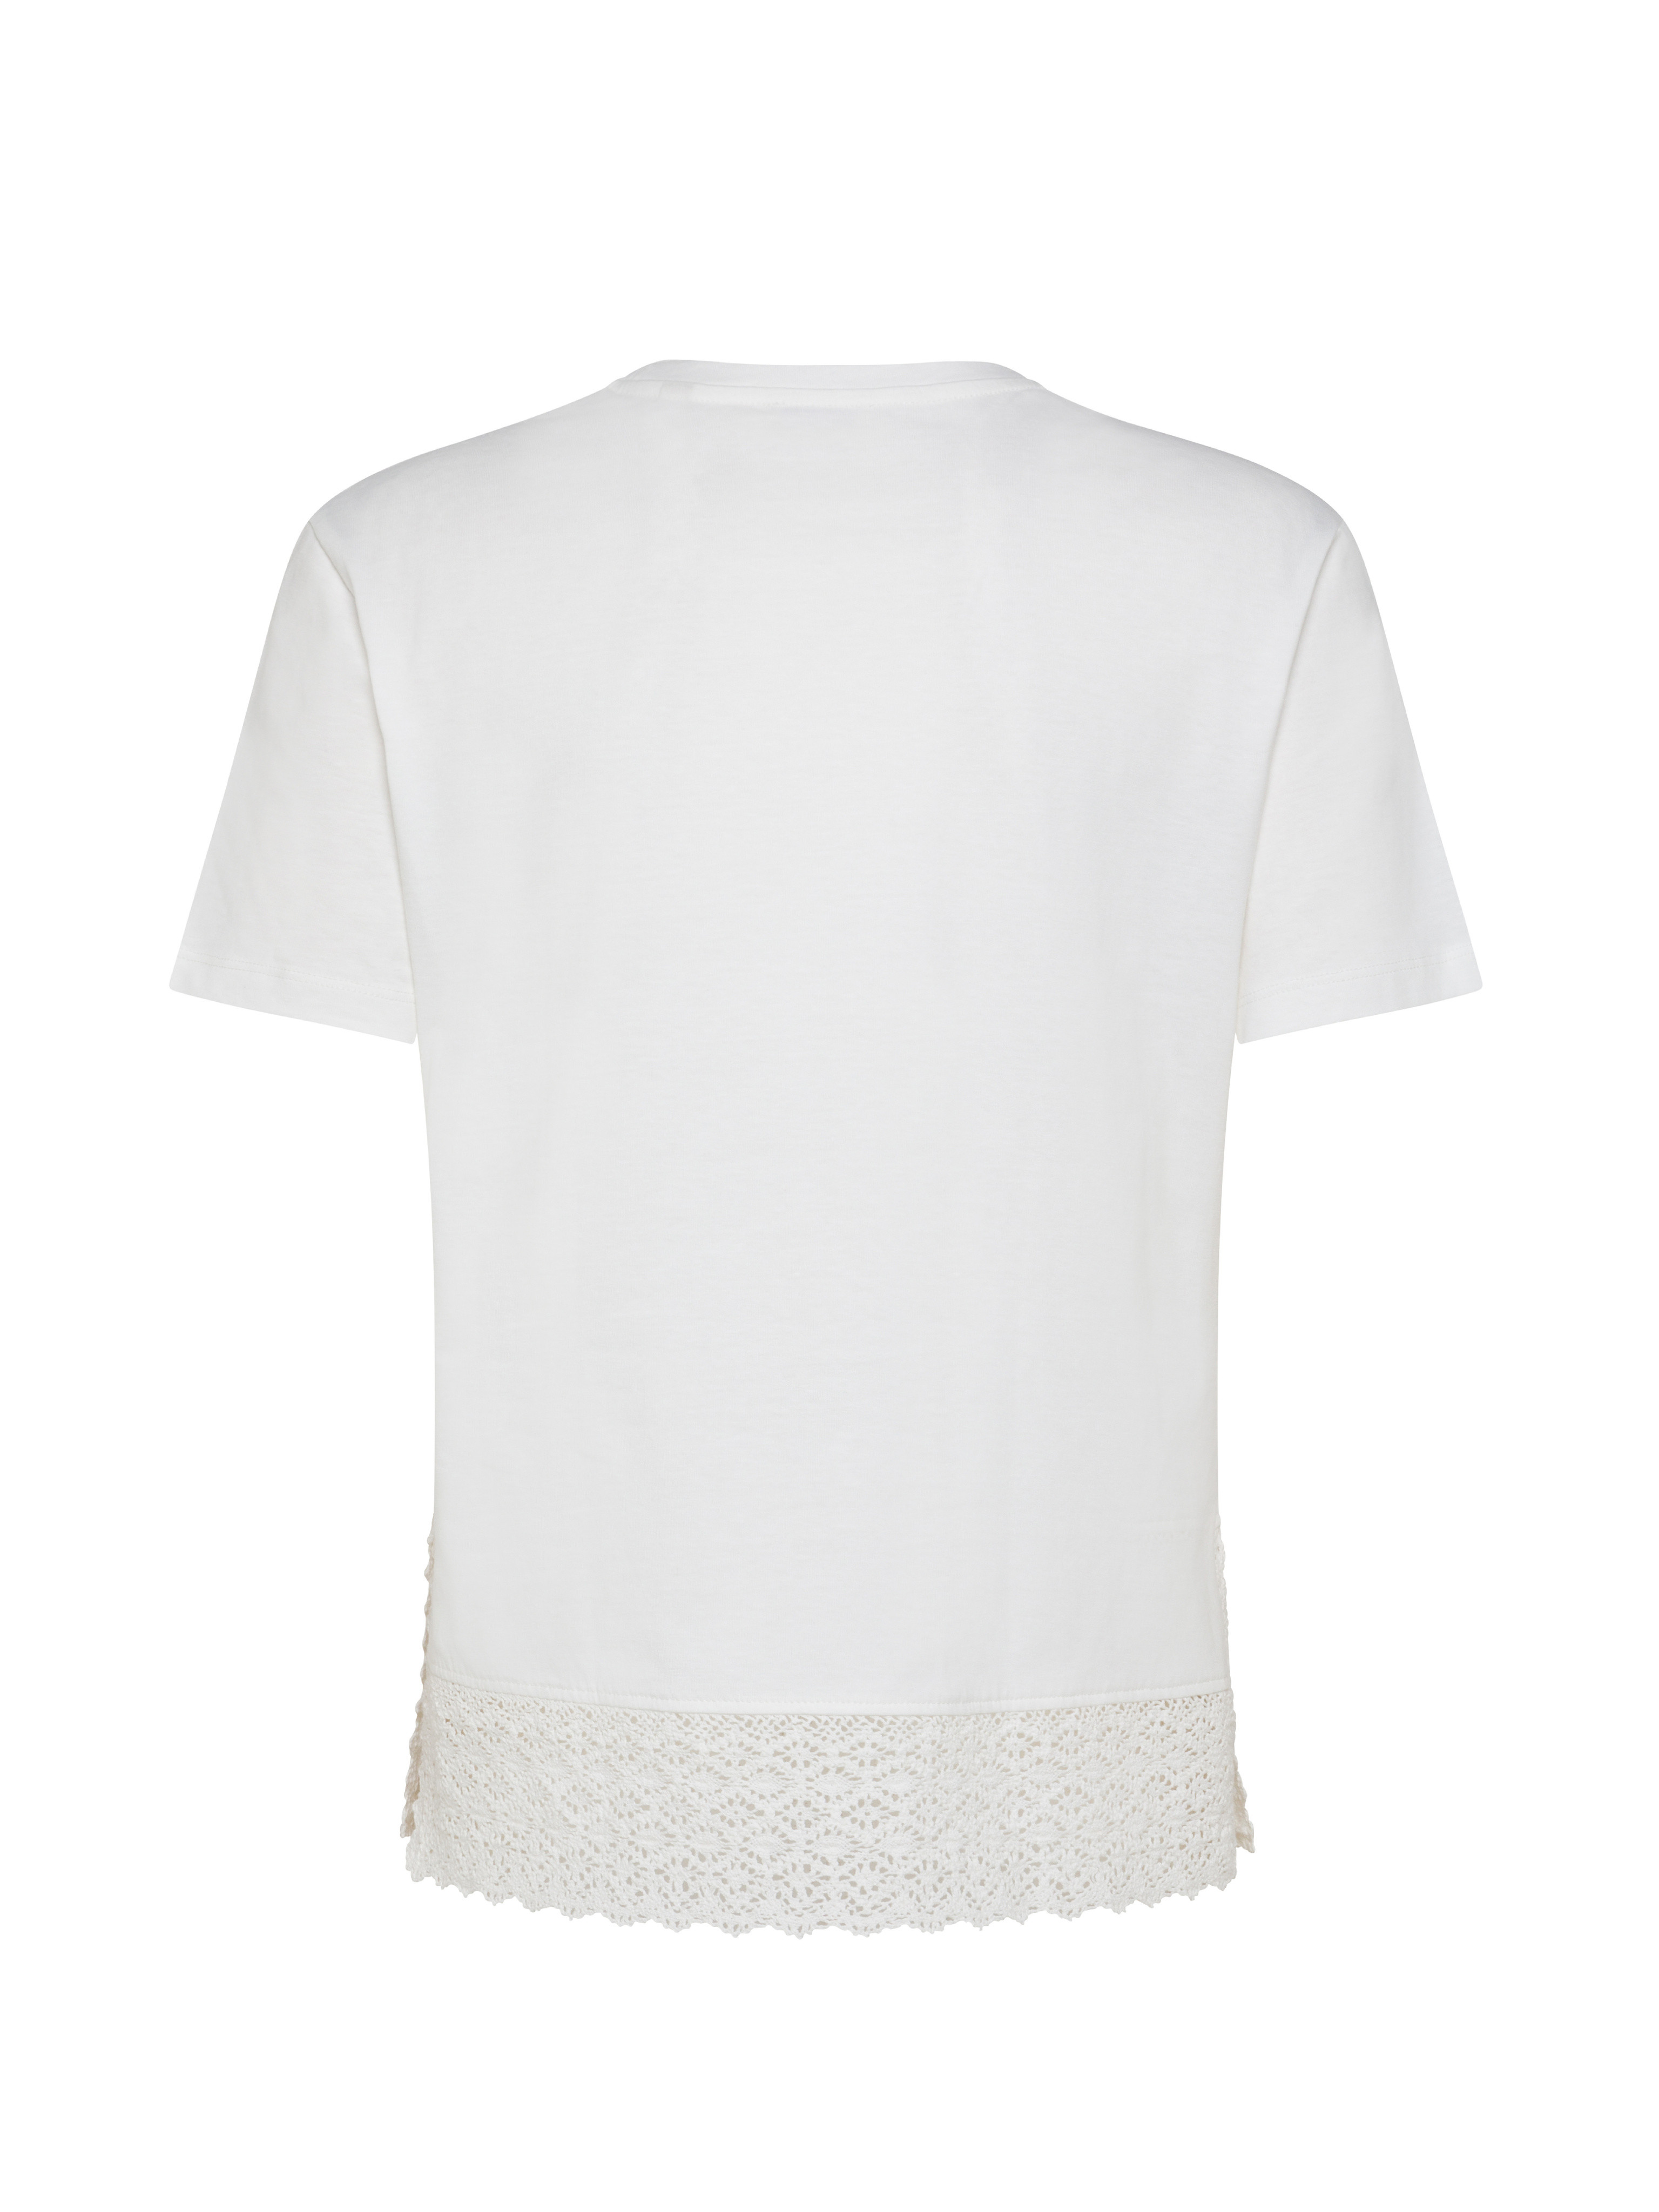 Esprit - Cotton T-shirt, White, large image number 1